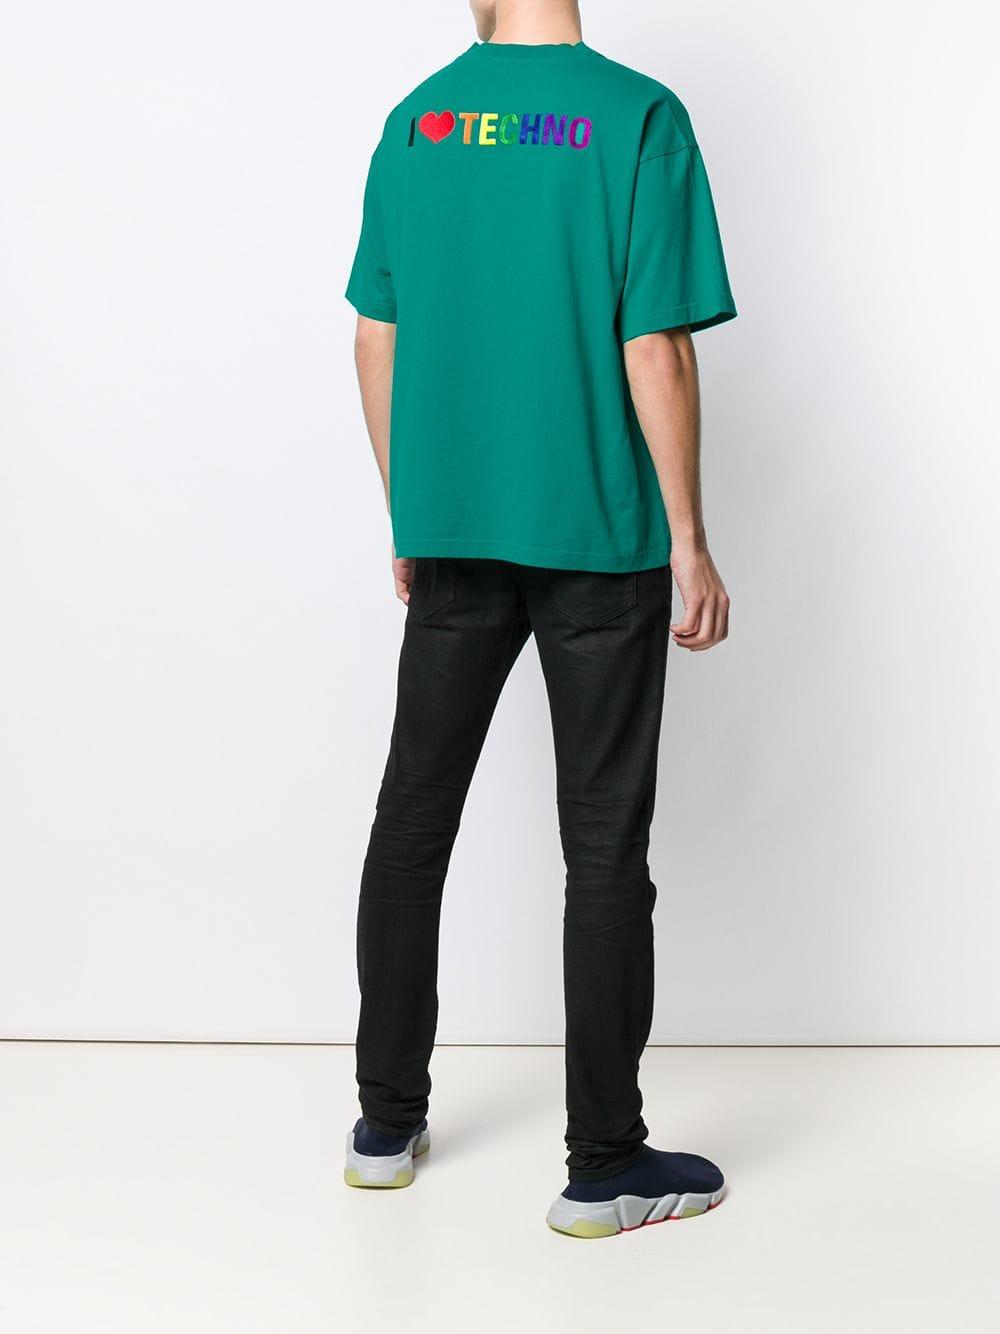 Balenciaga Cotton I Love Techno T-shirt in Green for Men - Lyst